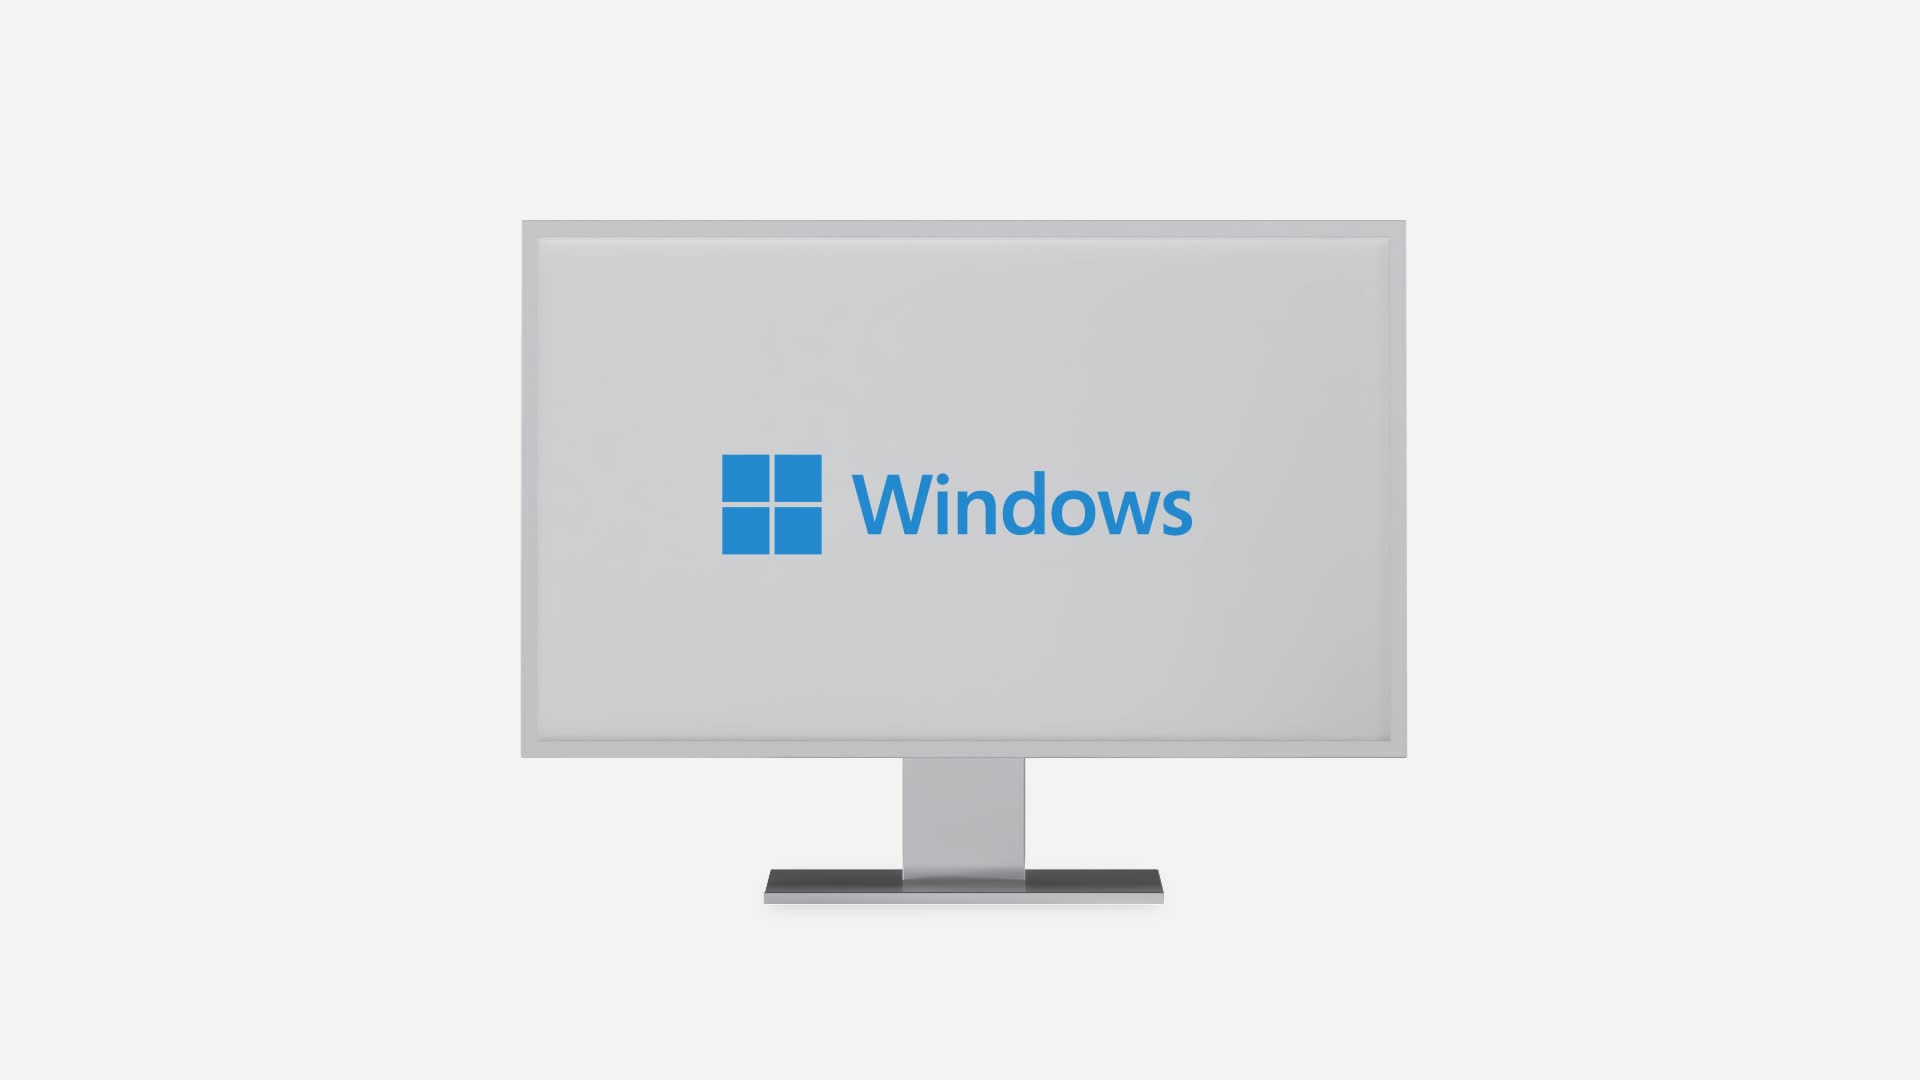 ADLA Store. Windows 10 pro license 64 BIT